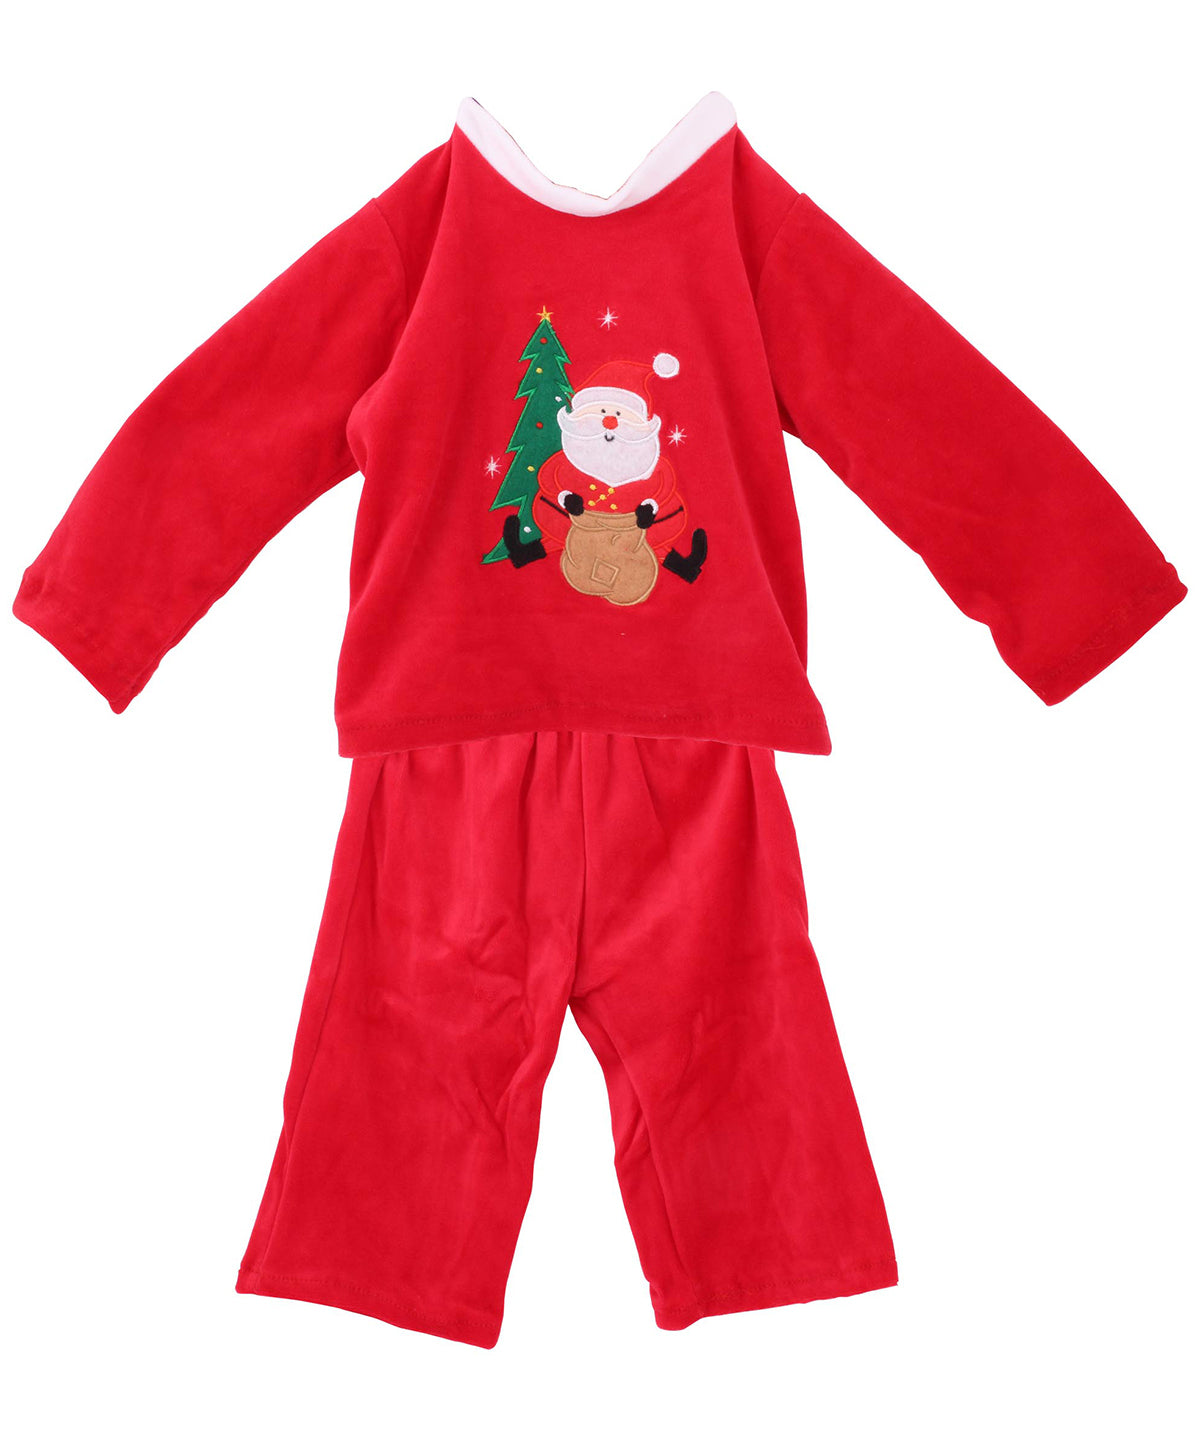 Náttföt - Childrens Christmas Pyjamas